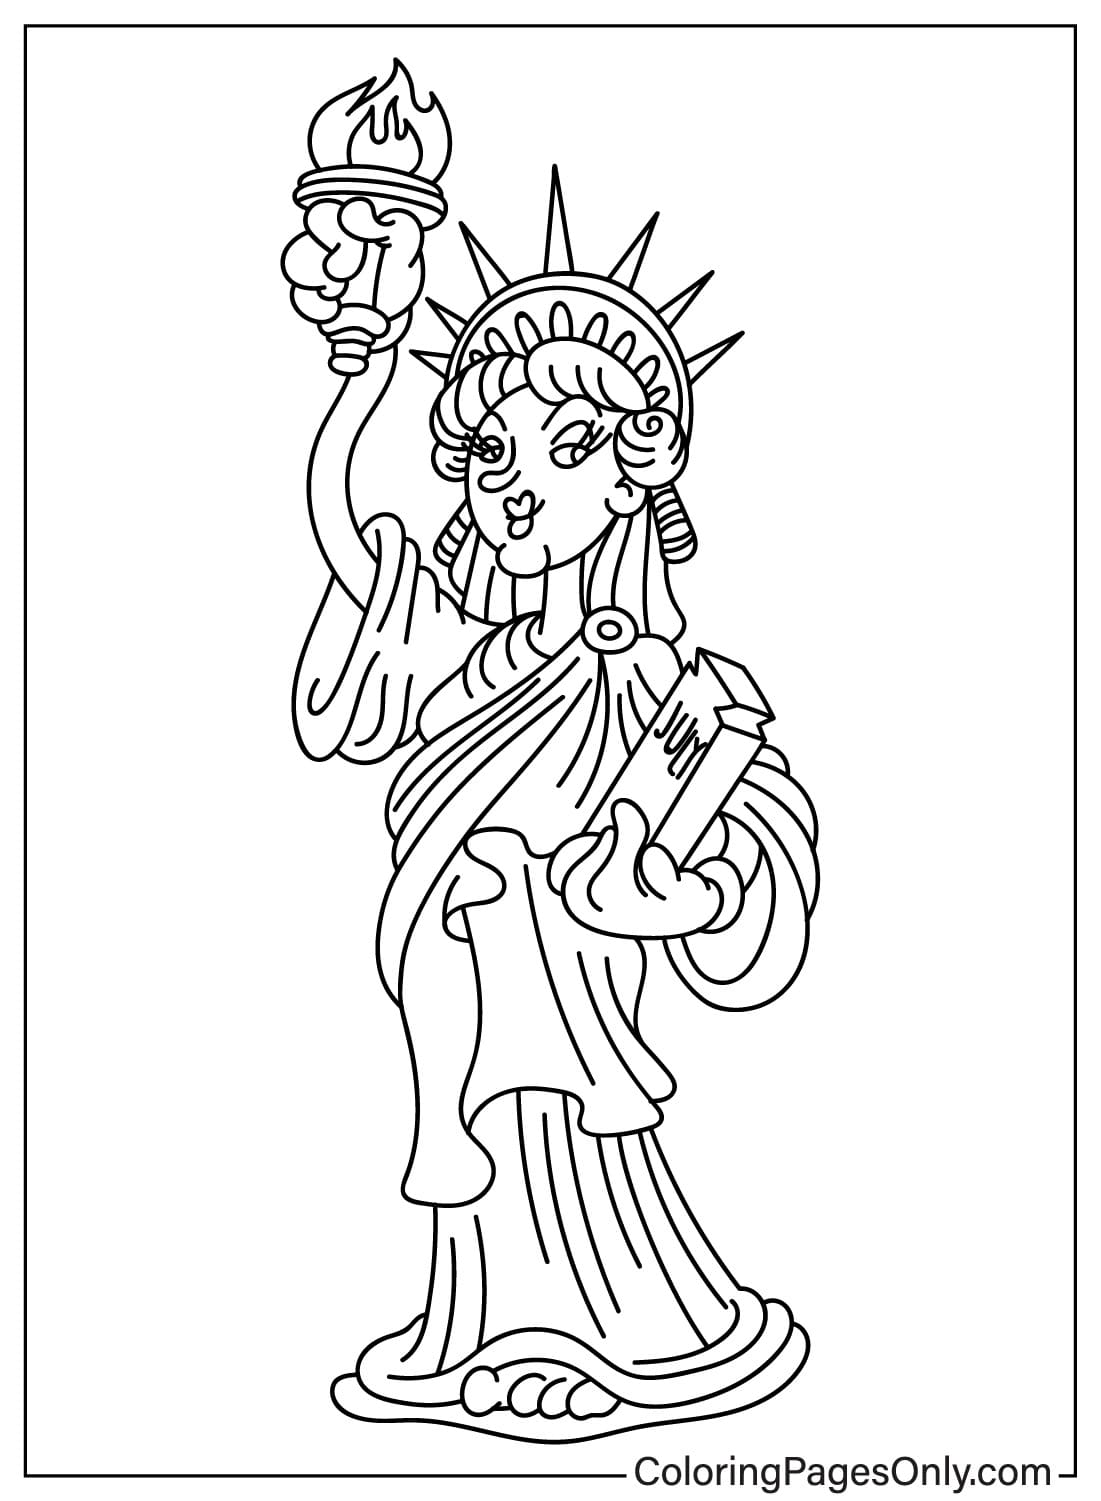 Feuille de coloriage de la Statue de la Liberté de style Cuphead